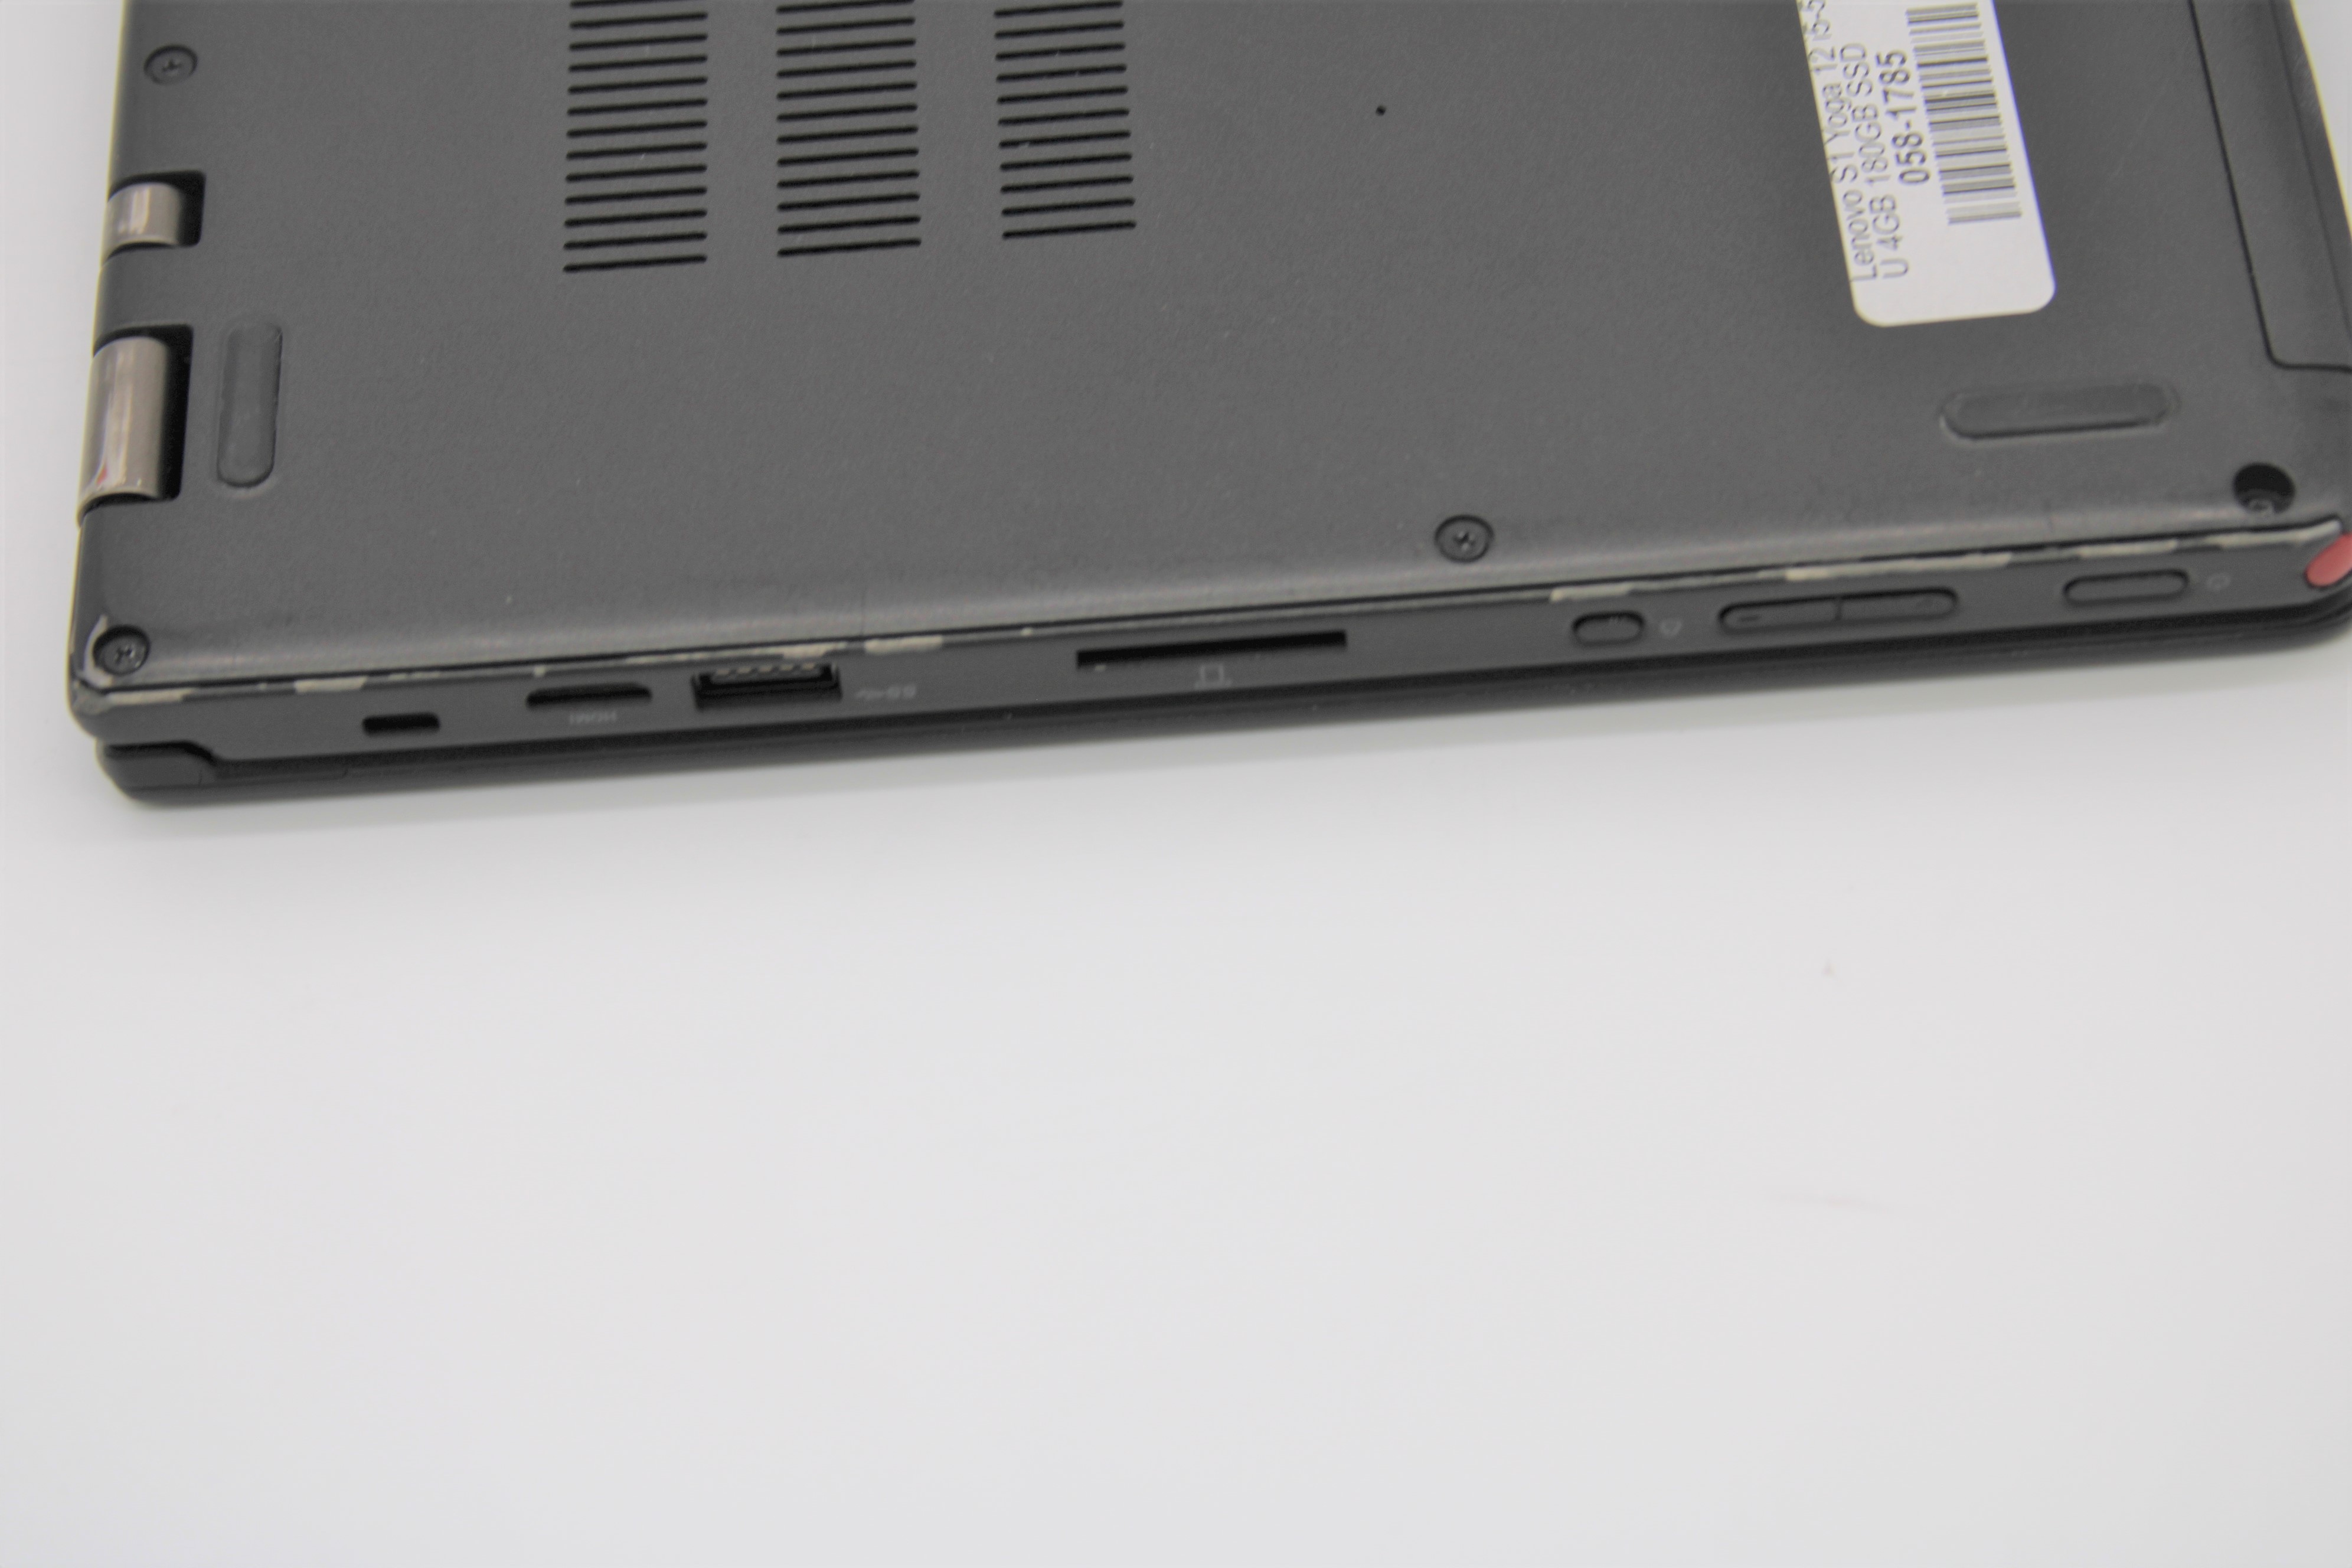 Lenovo Thinkpad Yoga 12 Type 20DK I5-5200U 2.20GHz 4GB 256GB SSD Win10 Pro